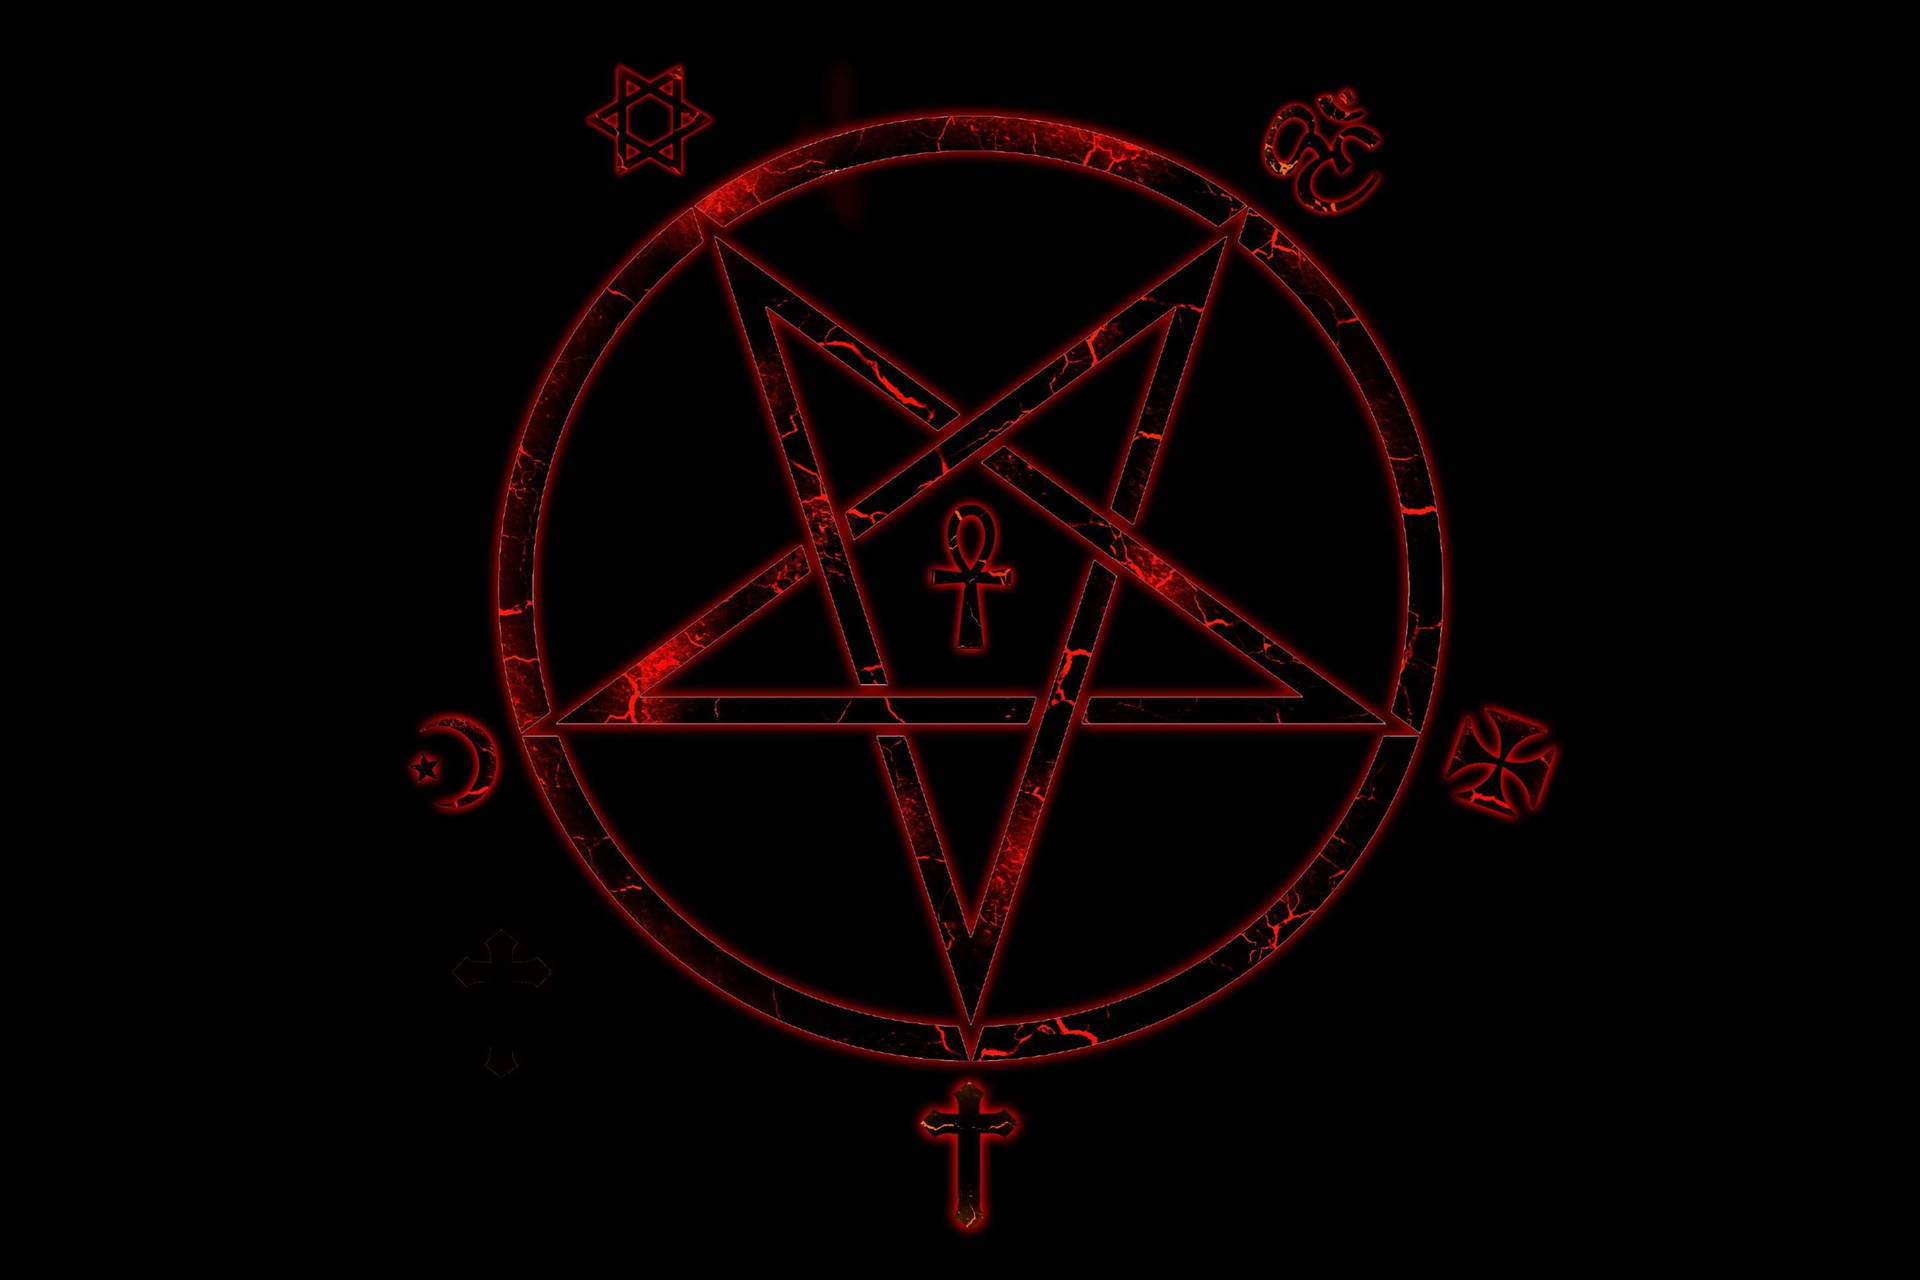 Caption: Ankh Cross Encapsulated Within A Pentagram